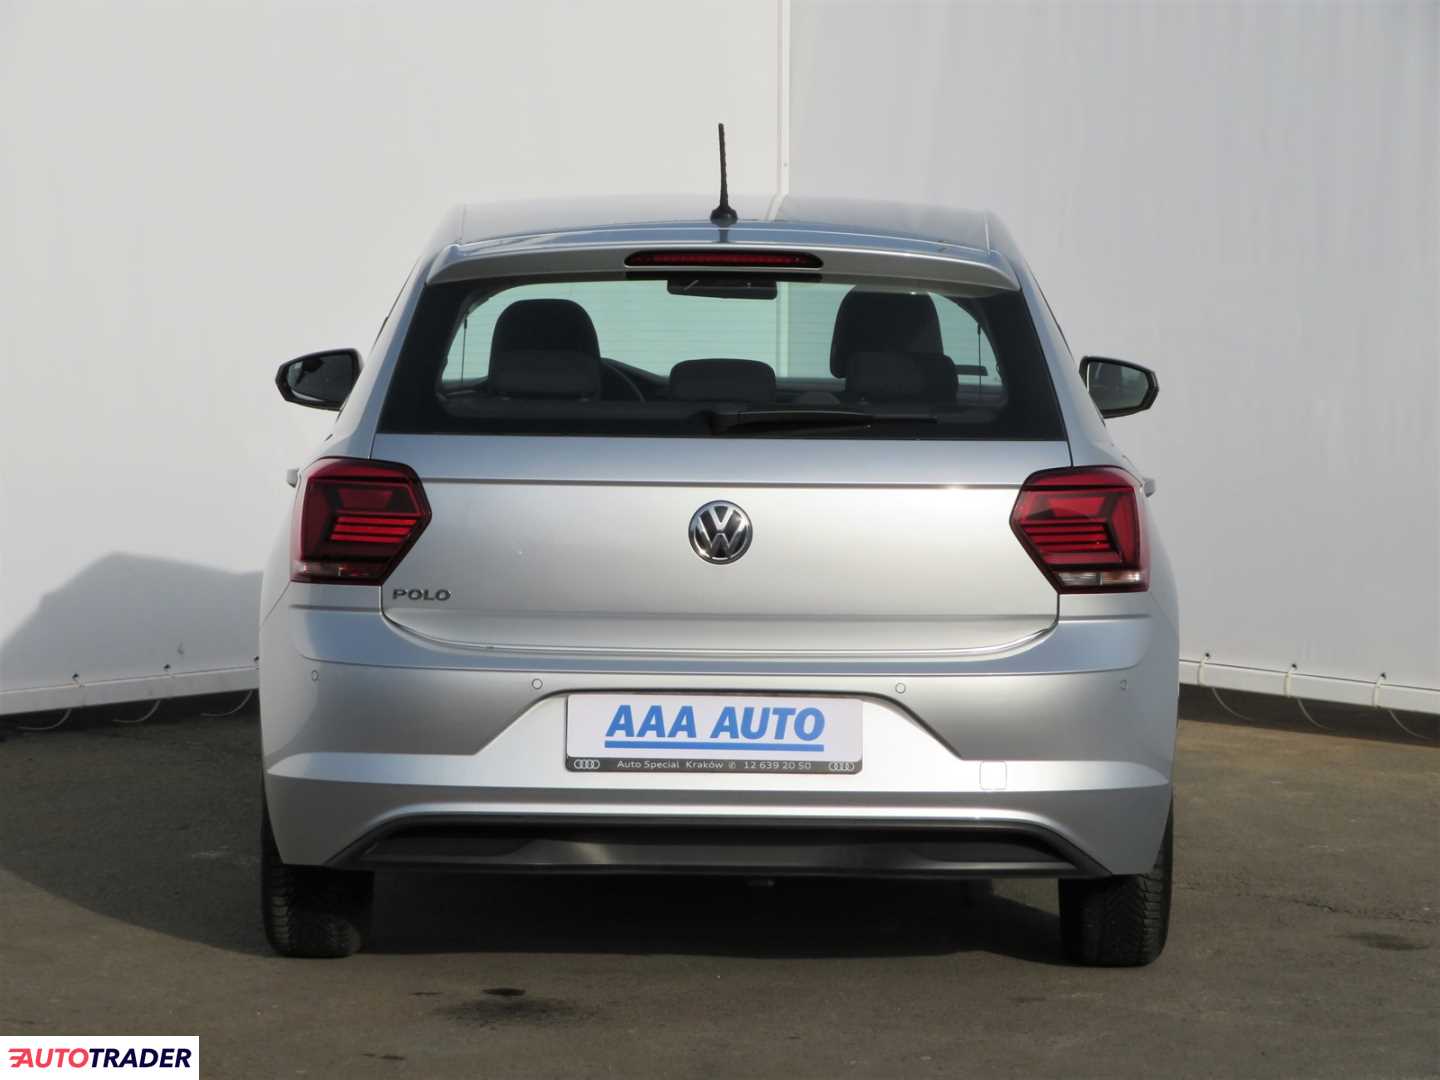 Volkswagen Polo 1.0 59 KM 2018r. (Piaseczno) Autotrader.pl